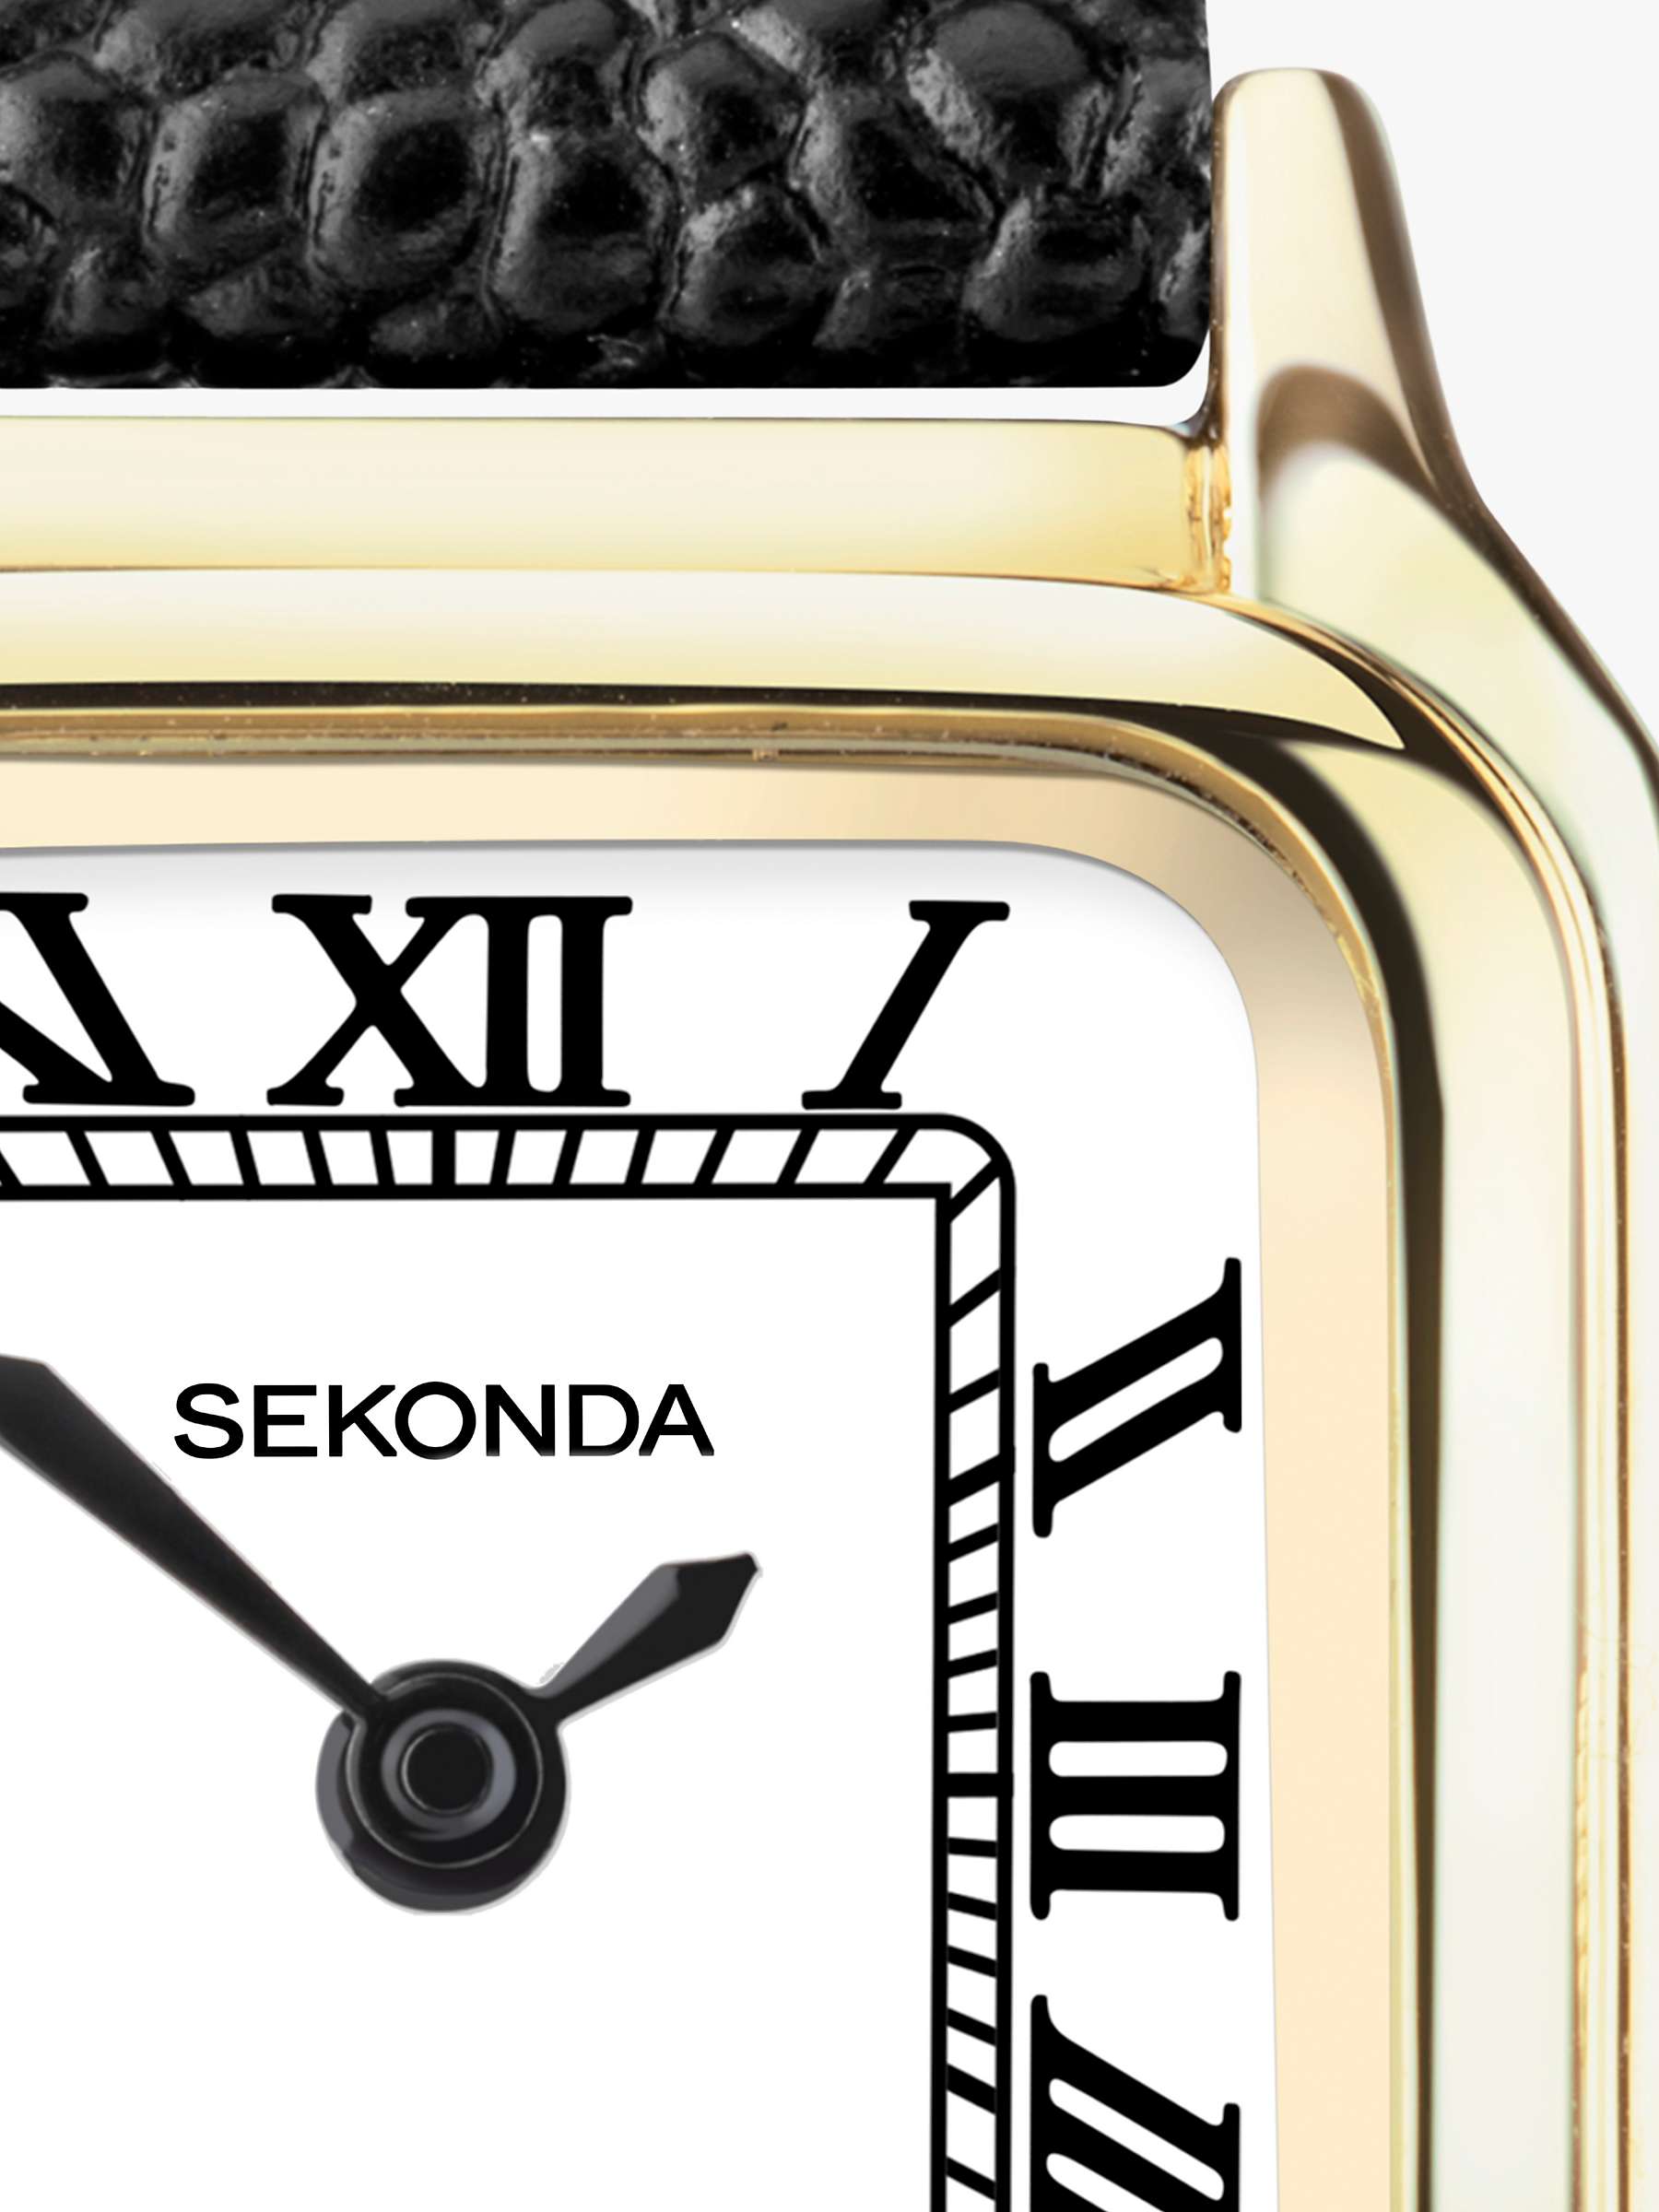 Buy Sekonda 40557 Women's Square Roman Numeral Leather Strap Watch, Black Online at johnlewis.com